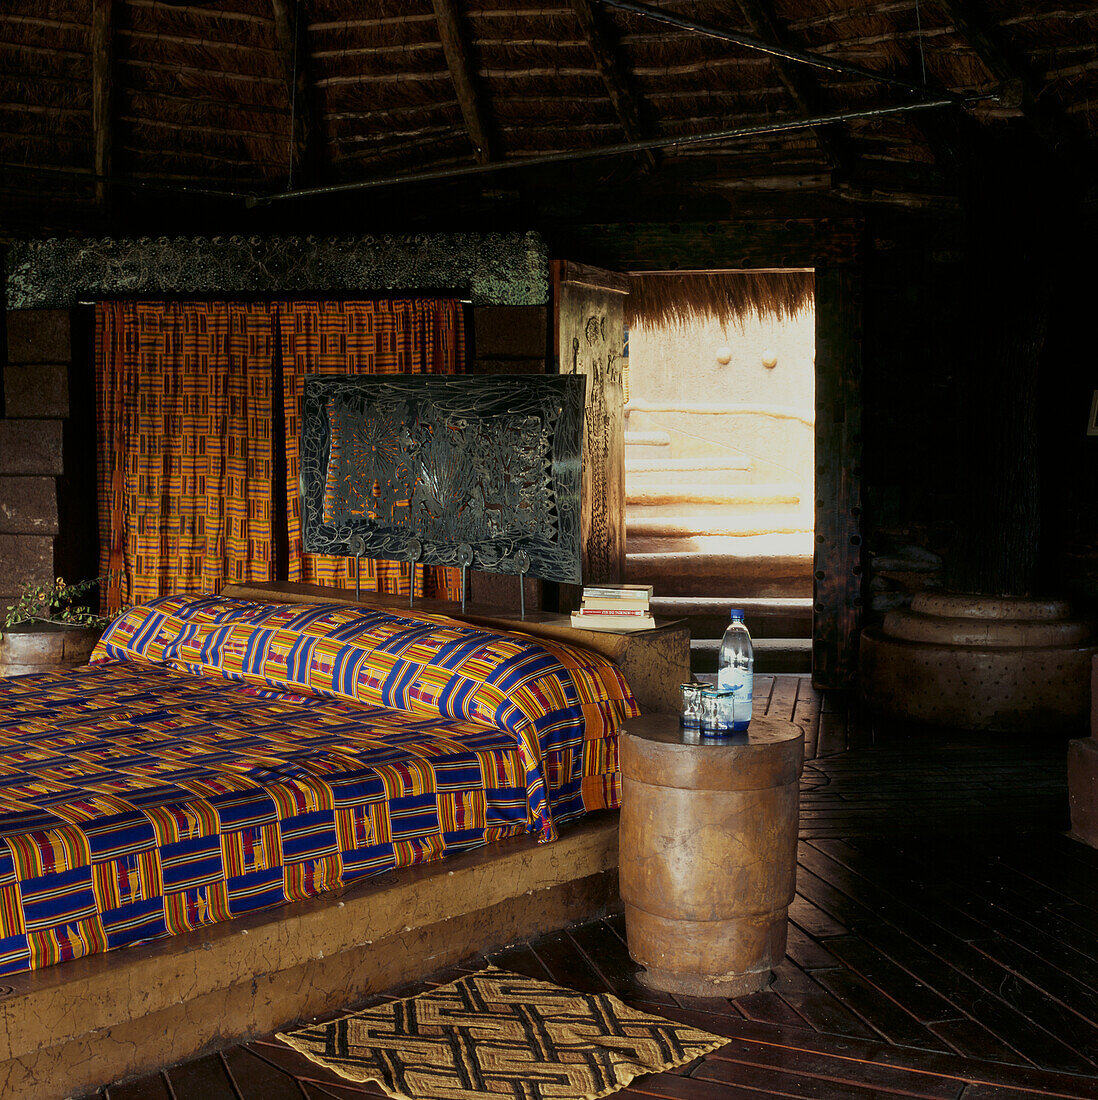 Bedroom with ethnic textiles